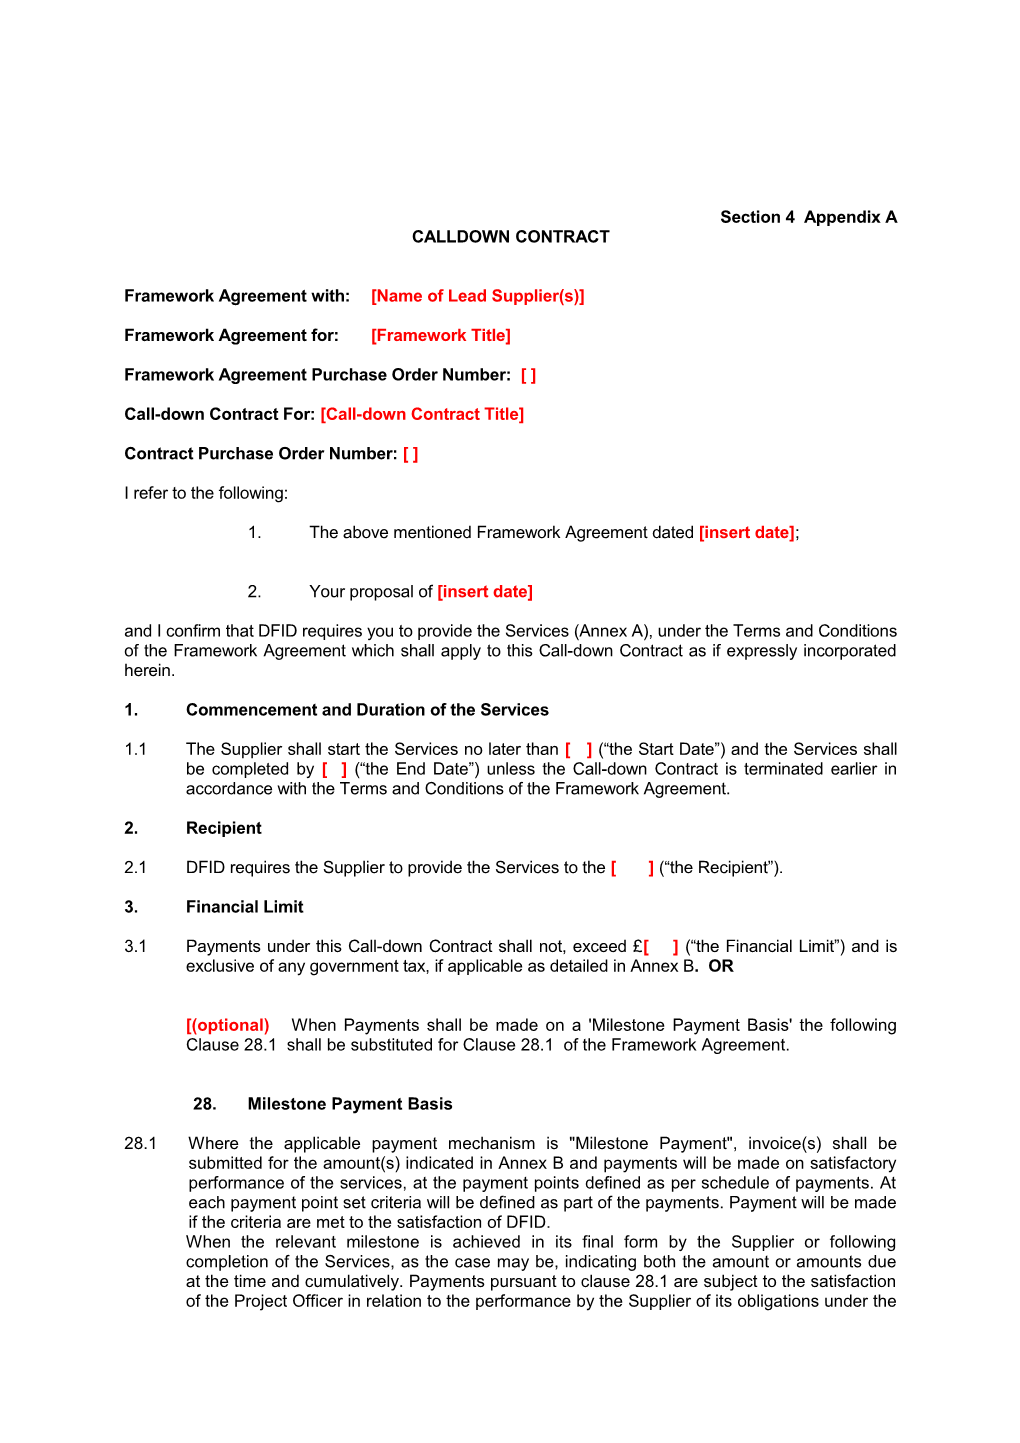 Framework Agreement Calldown Contract